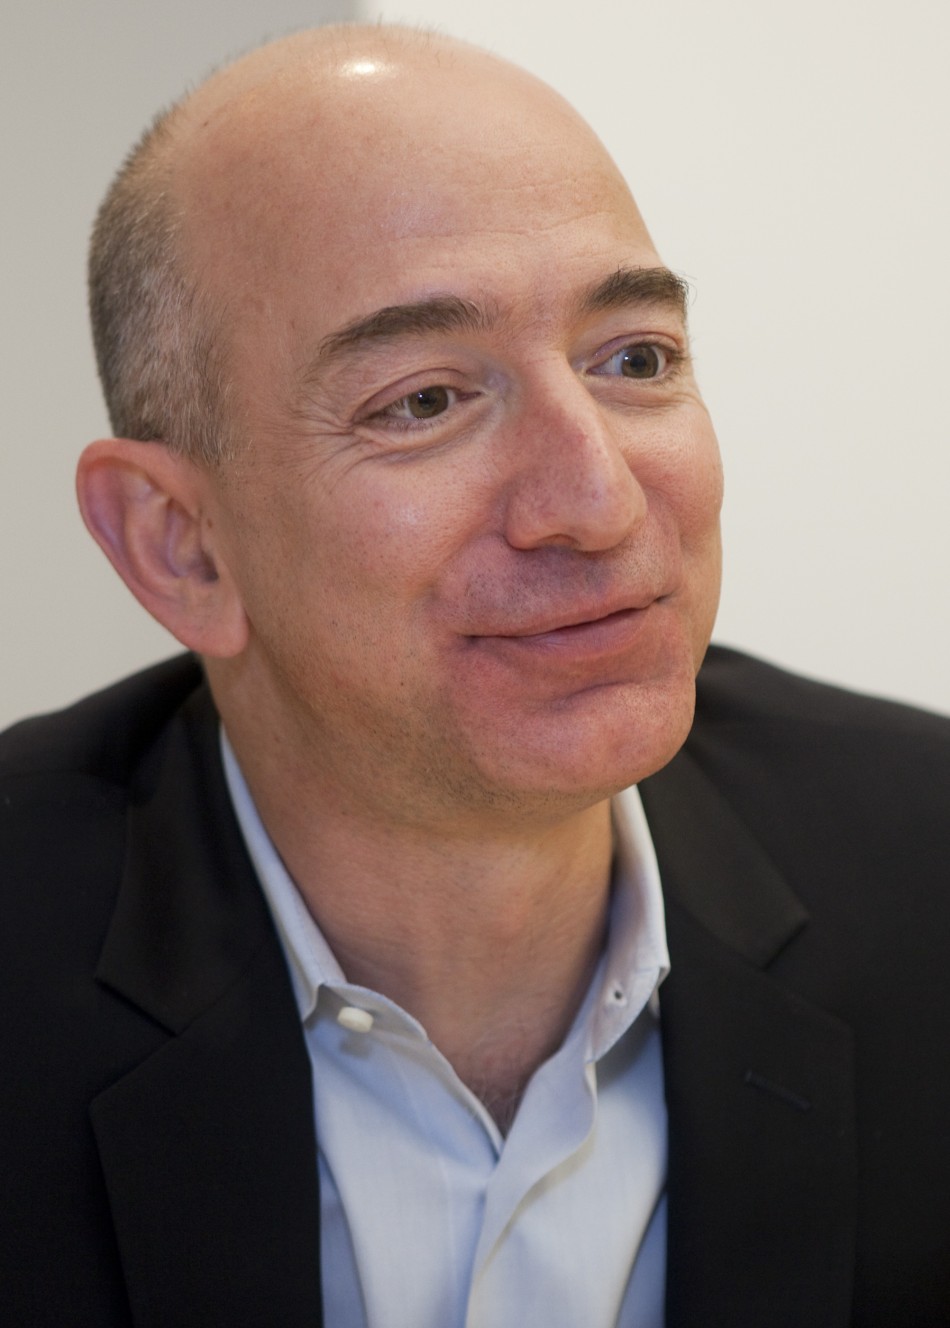 I Was Here.: Jeff Bezos